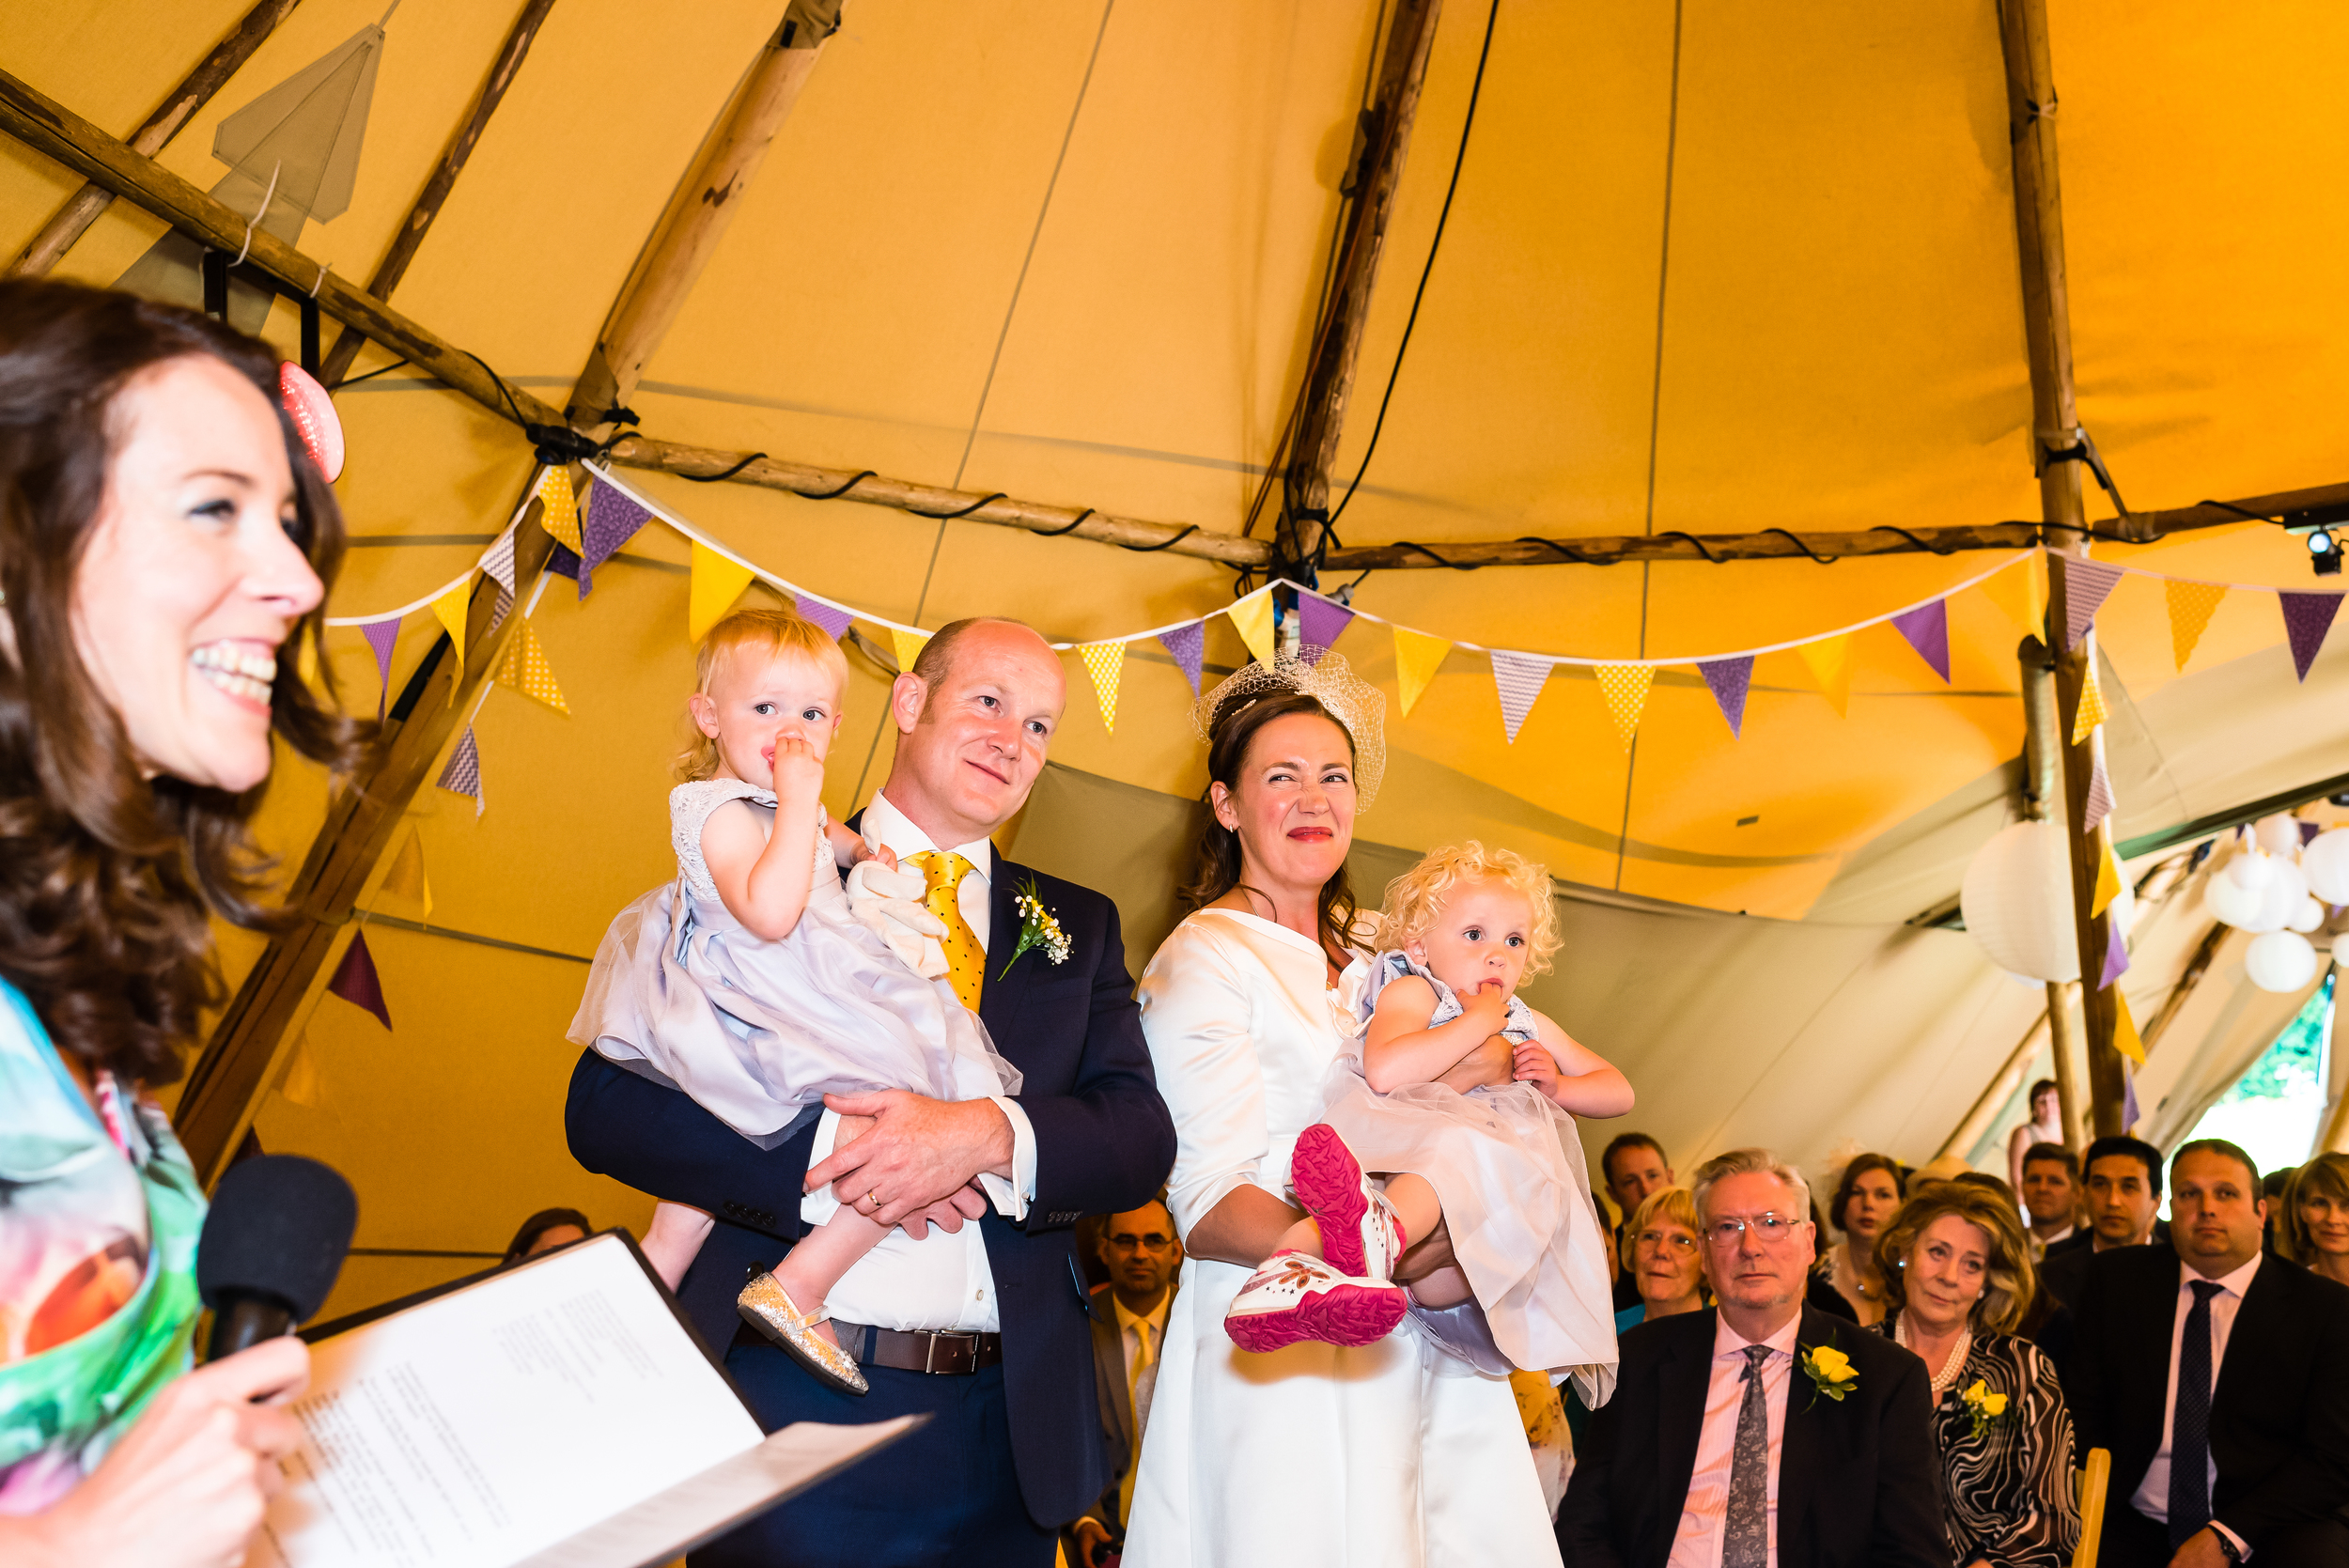 Steve & Nic - Tipi Wedding & Naming Ceremony | www.myperfectceremony.co.uk